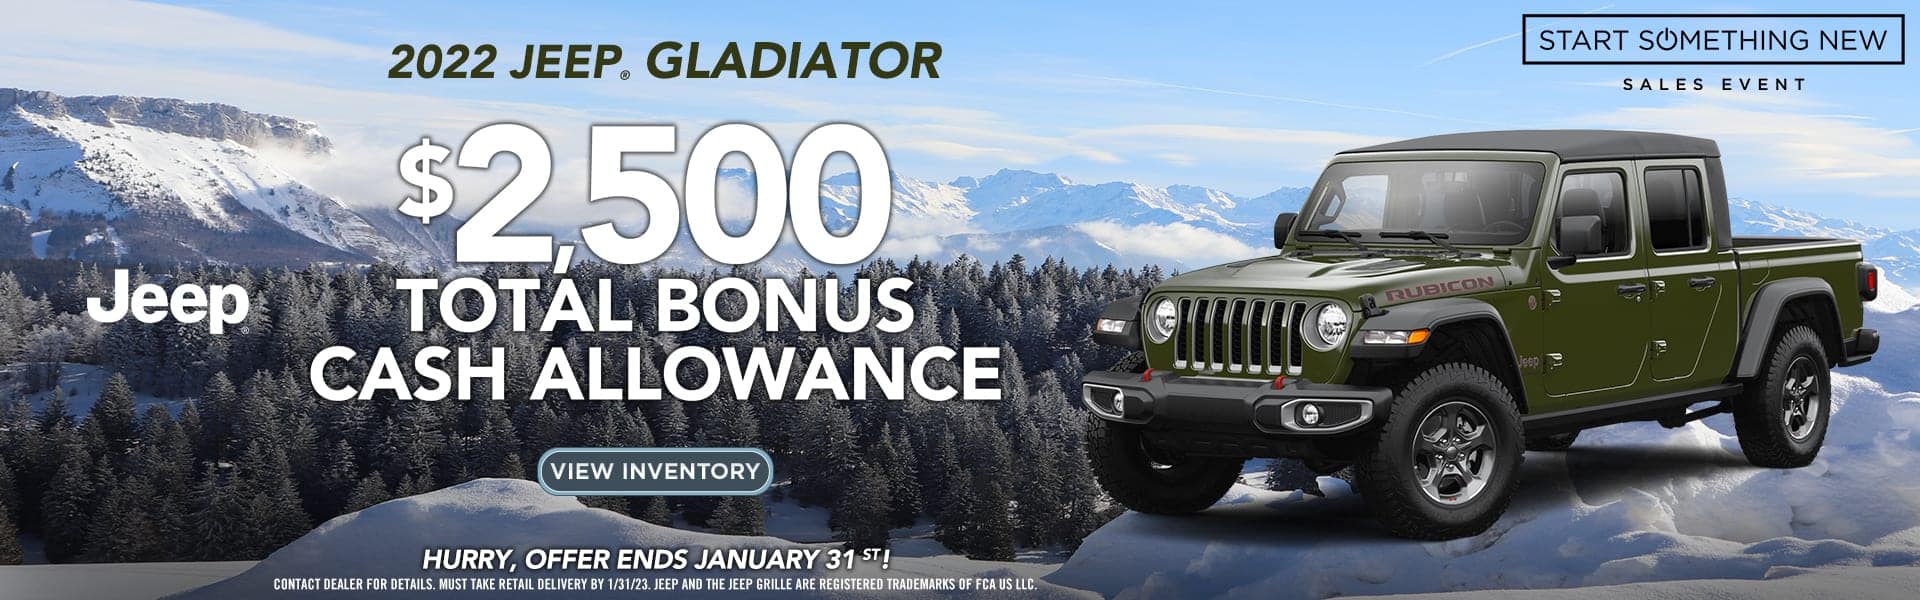 Jeep Gladiator offer